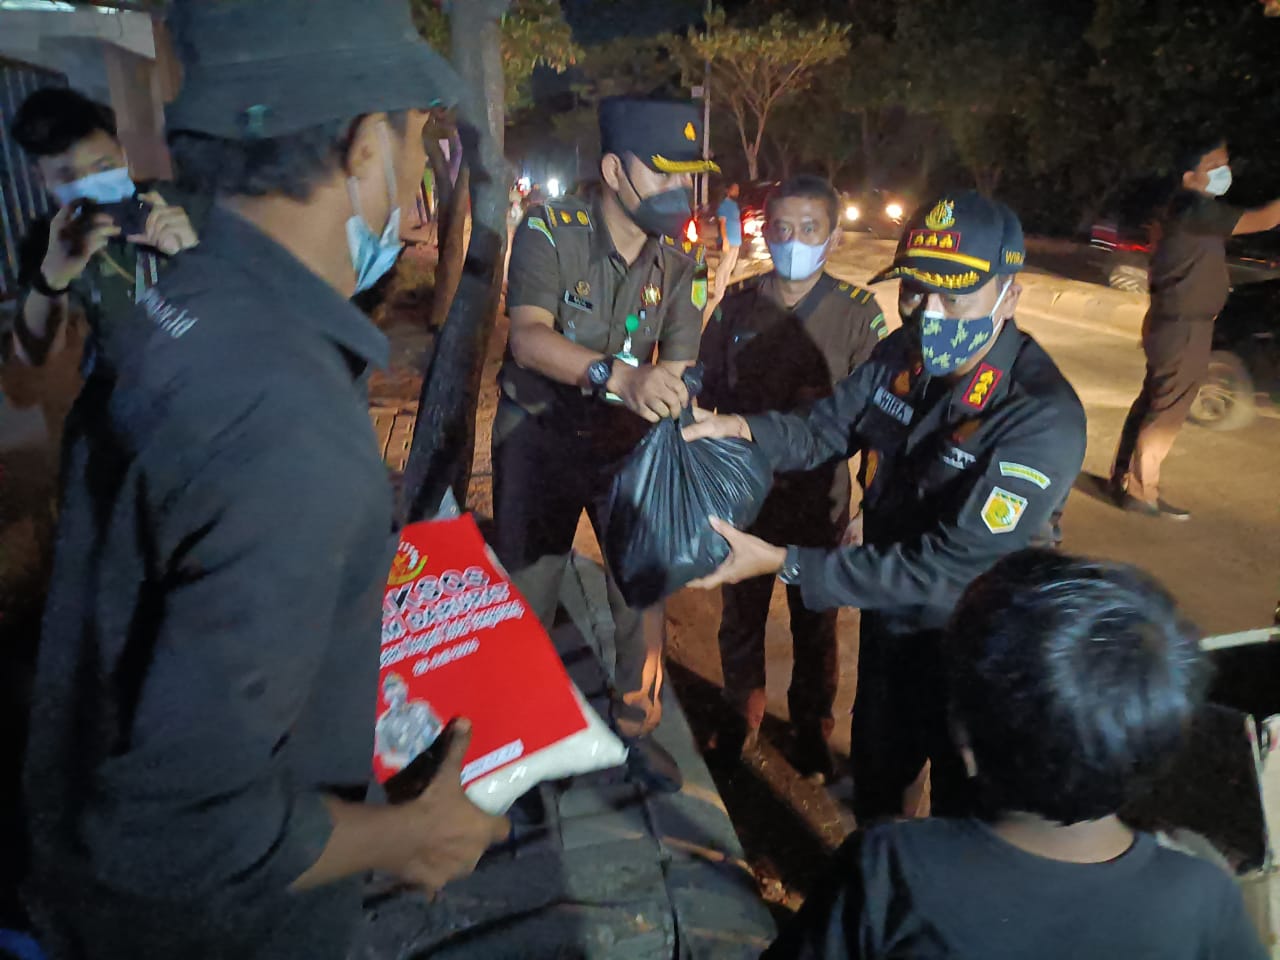 Kejaksaan Negeri Kota Tangerang berkeliling Kota Tangerang mencari orang-orang pinggiran untuk memberikan bantuan sosial (bansos) berupa paket sembako, Minggu 25 Juli 2021 malam.